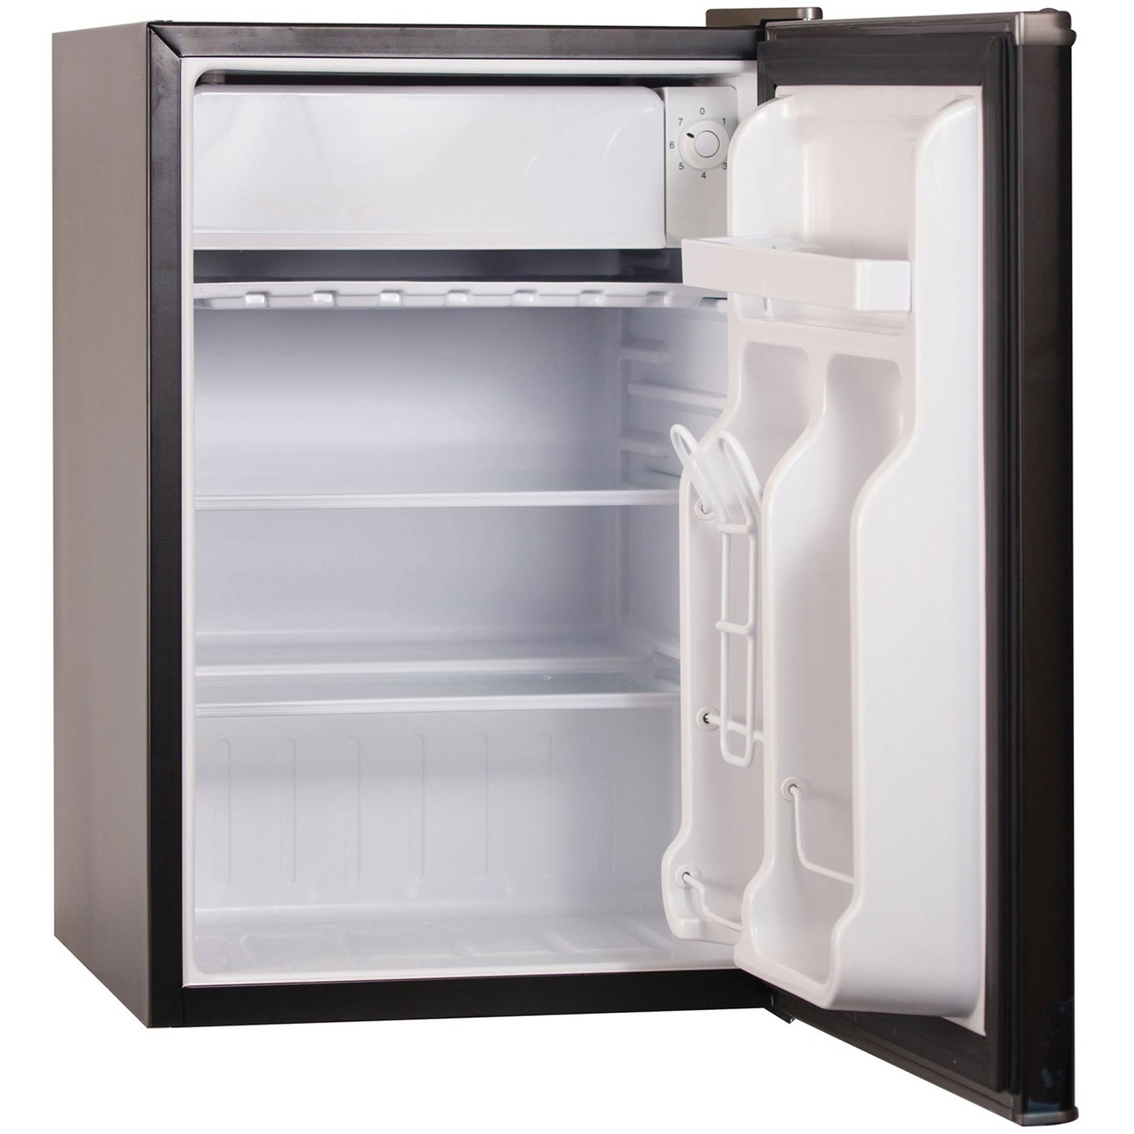 Black & Decker Compact Refrigerator - 2.5 cu ft - Silver